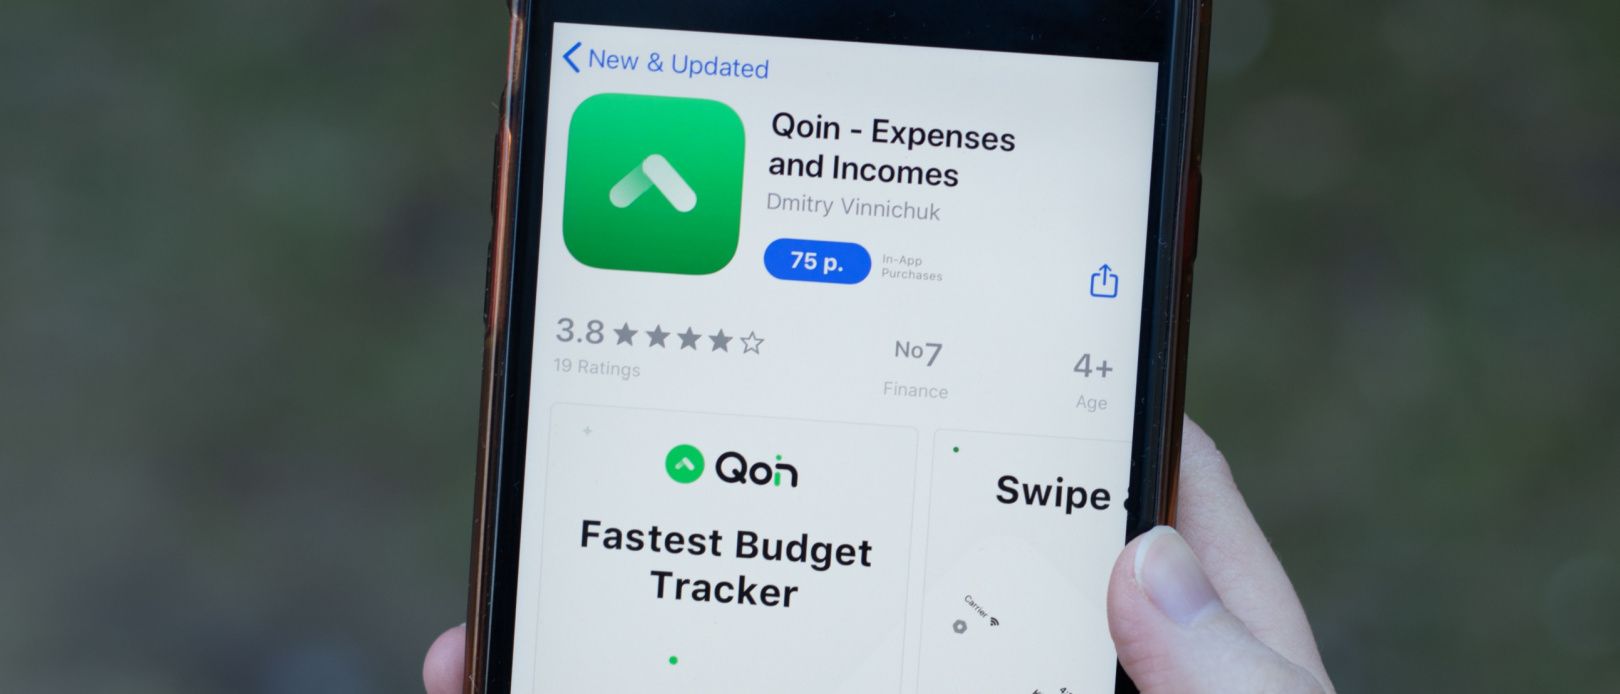 Qoin app logo close-up on phone screen